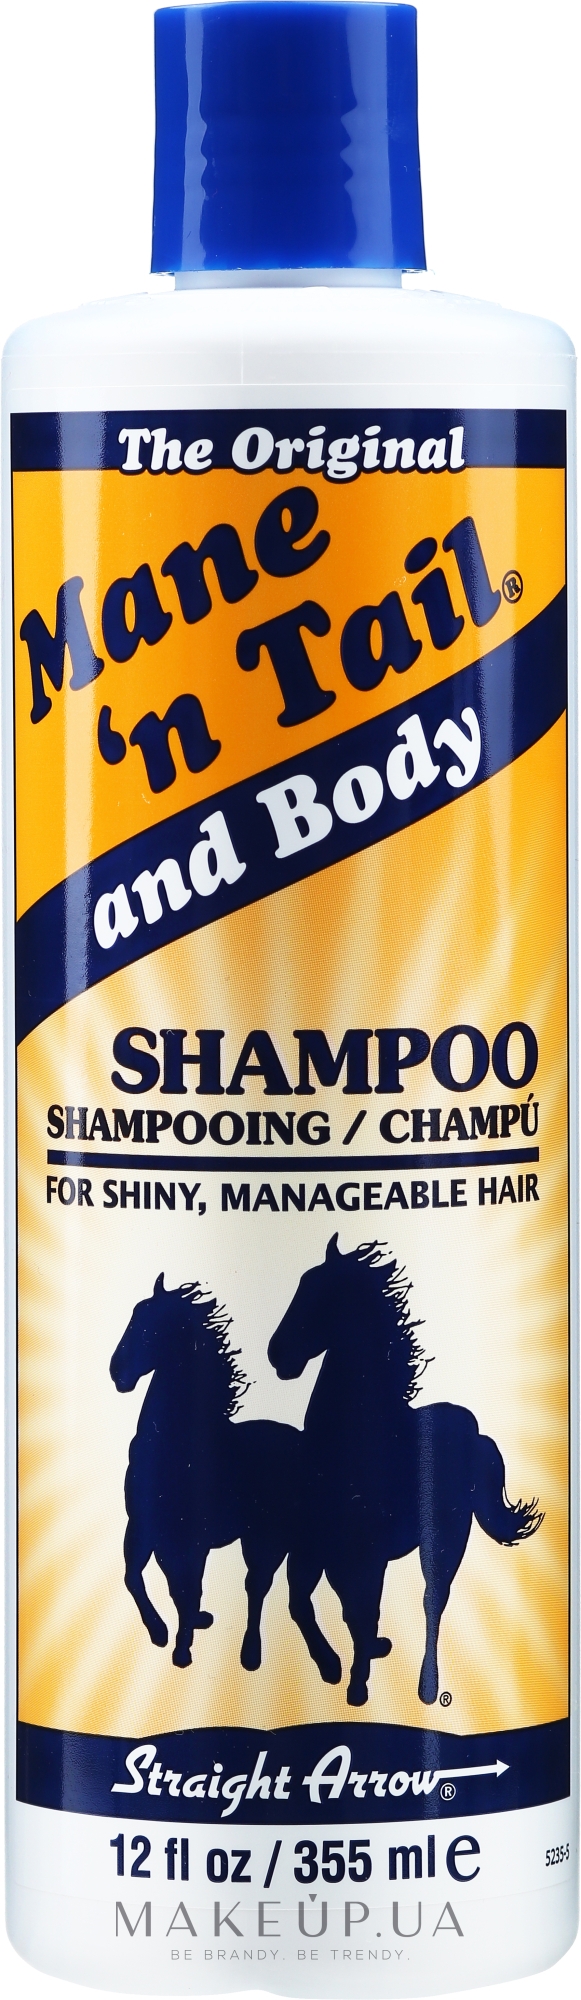 Шампунь для волос и тела 2 в 1 - Mane 'n Tail The Original Shampoo — фото 355ml